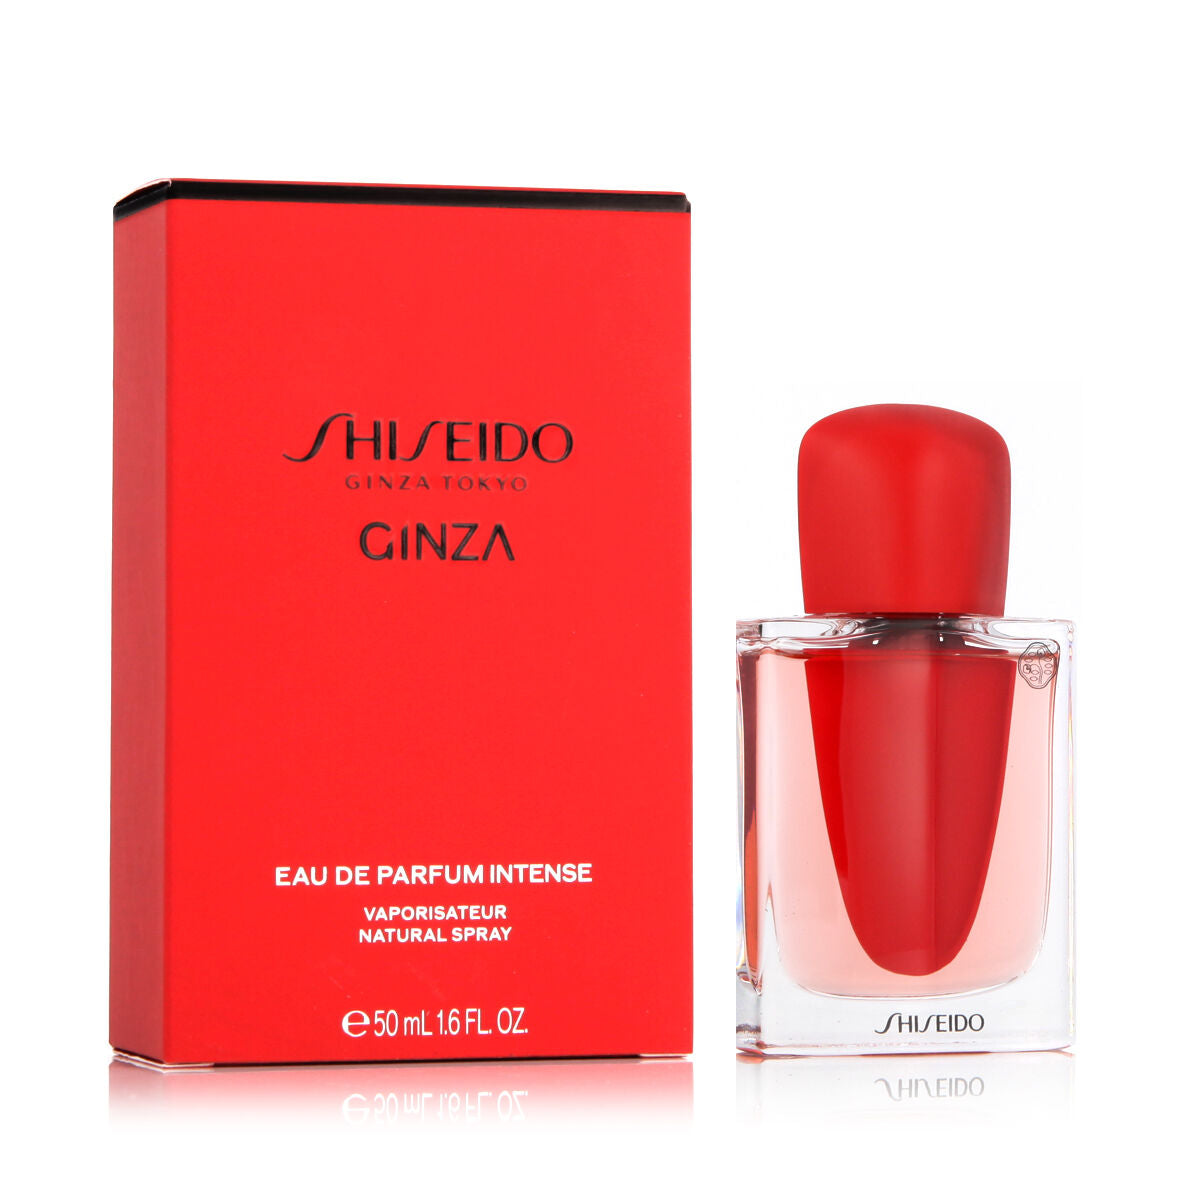 Kaufe Shiseido 30 ml - Damen bei AWK Flagship um € 65.00